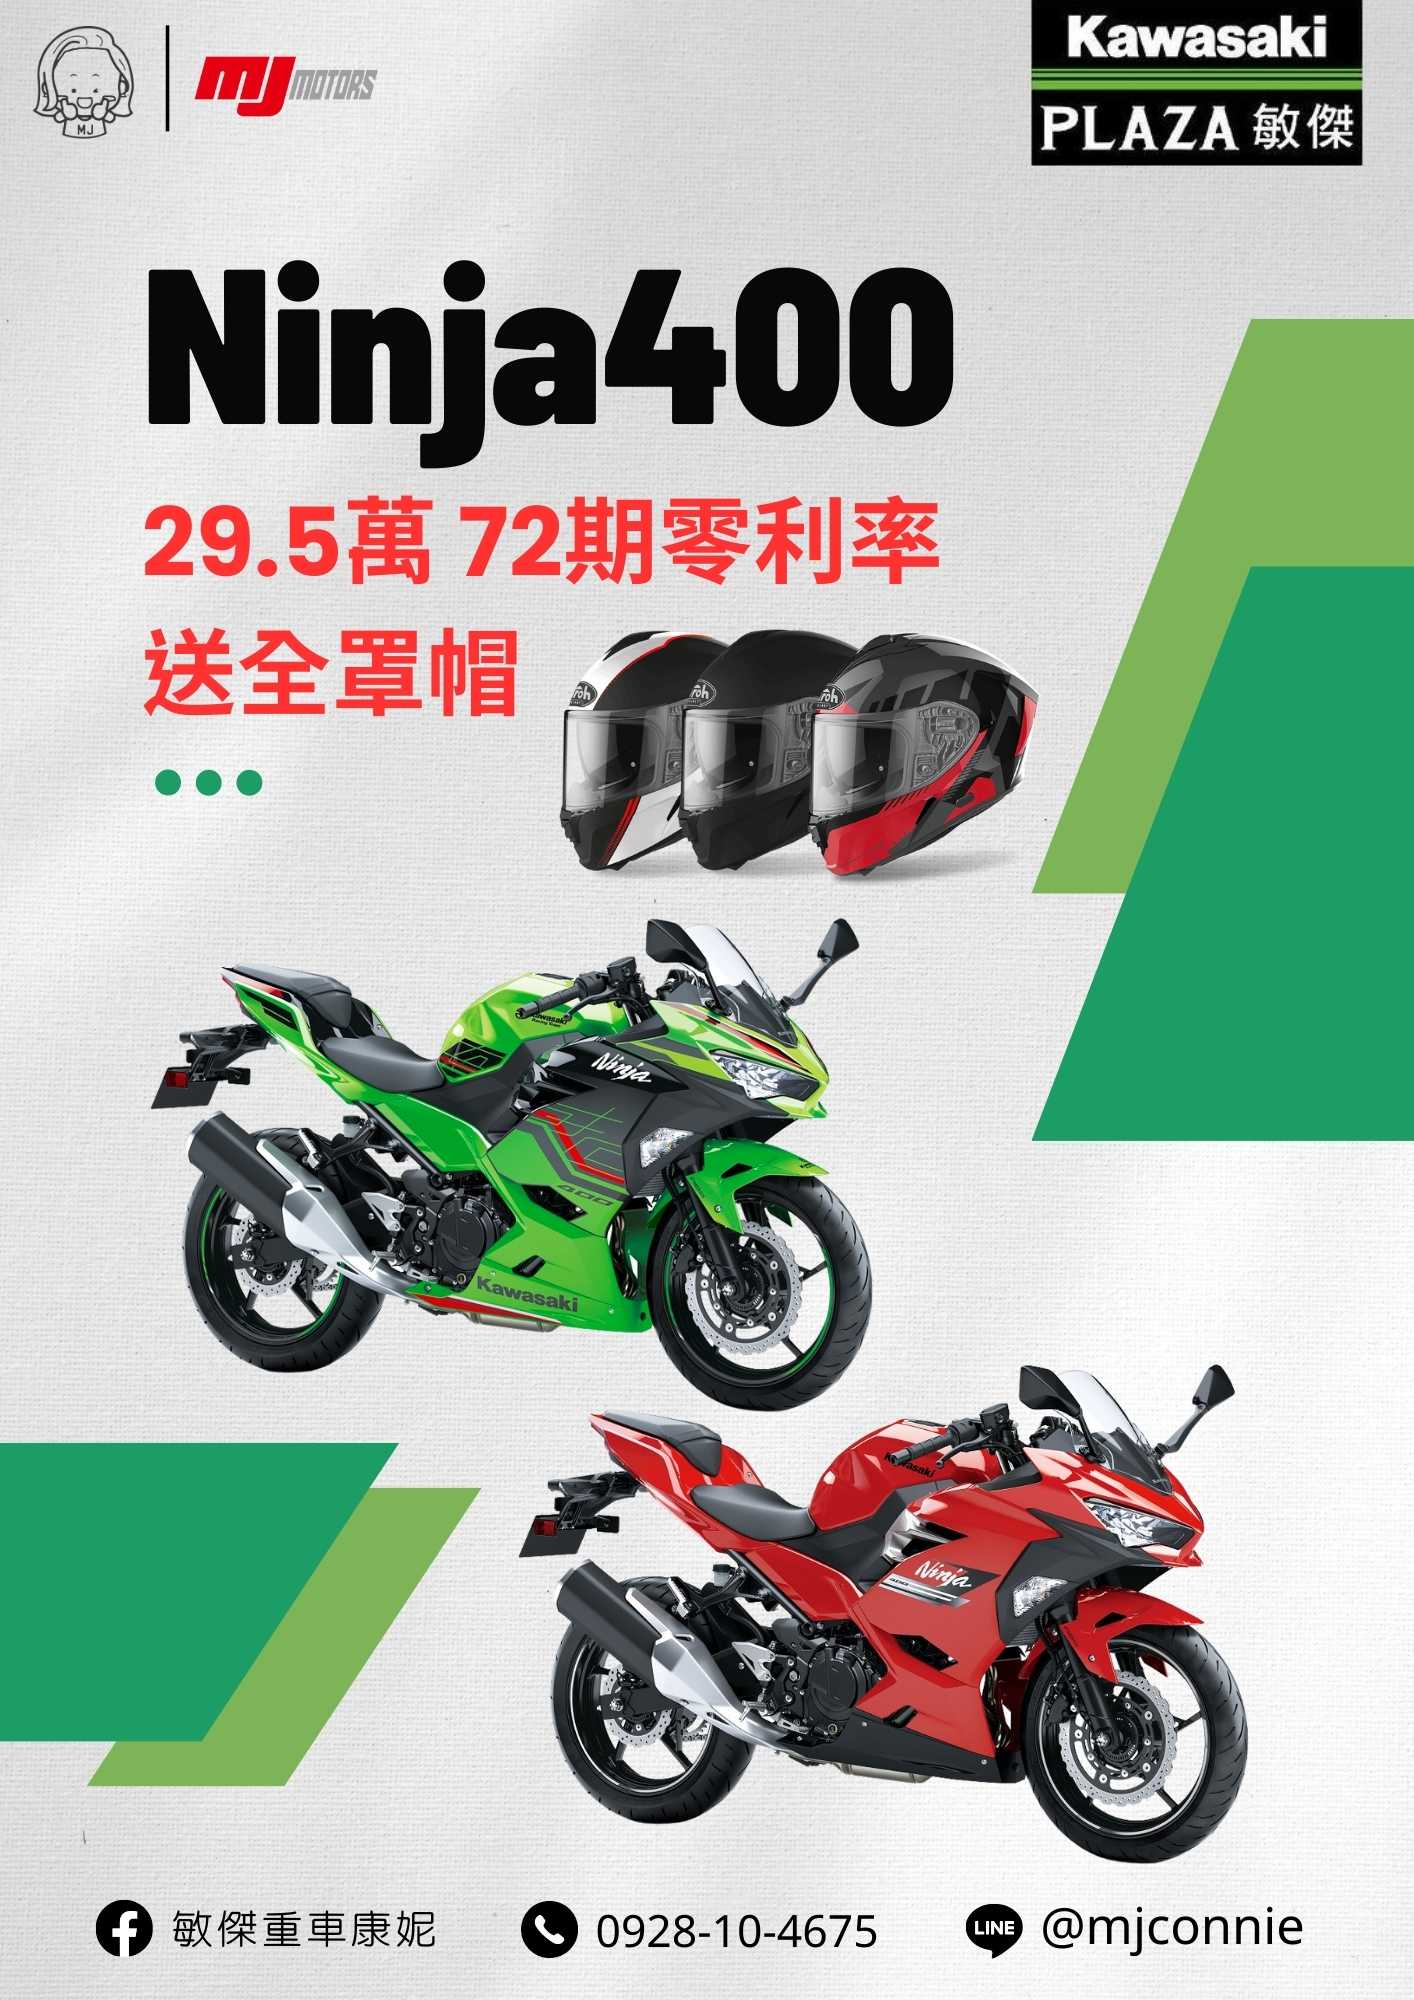 KAWASAKI NINJA400新車出售中 『敏傑康妮』Kawasaki Ninja系列~ 最受歡迎的運動車系!! 最棒的購車方案 請聯絡康妮^^ | 敏傑車業資深銷售專員 康妮 Connie